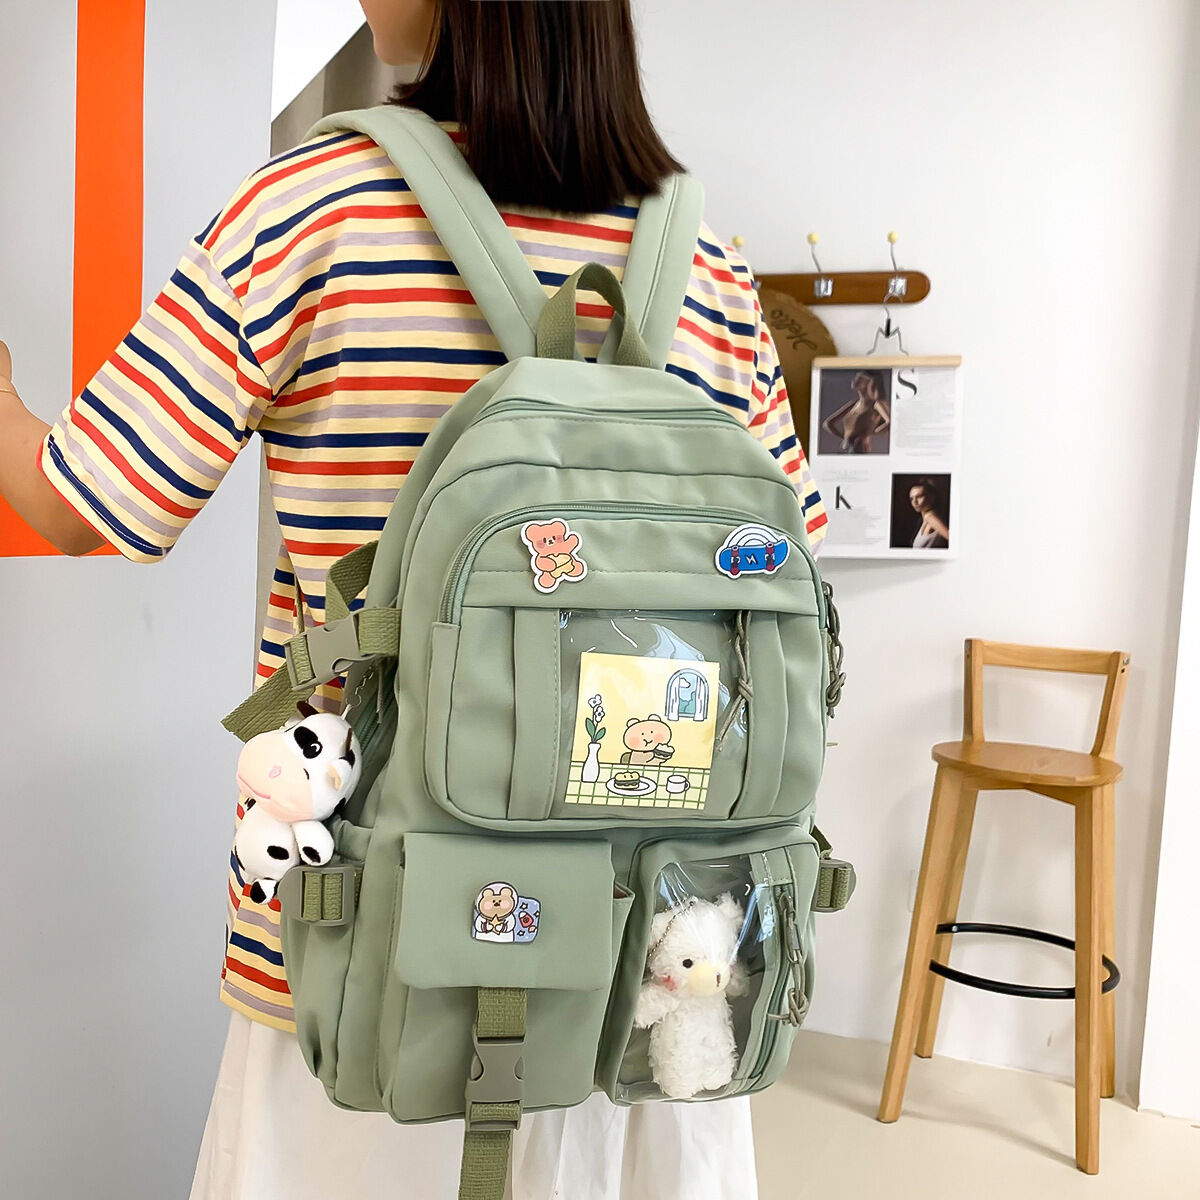 Vbiger School Backpacks for Girls 17-inch Large Capacity Kids Backpack Fashion Cartoon Pattern Student Schoolbag Laptop Backpack for Girls-Pink, Kids